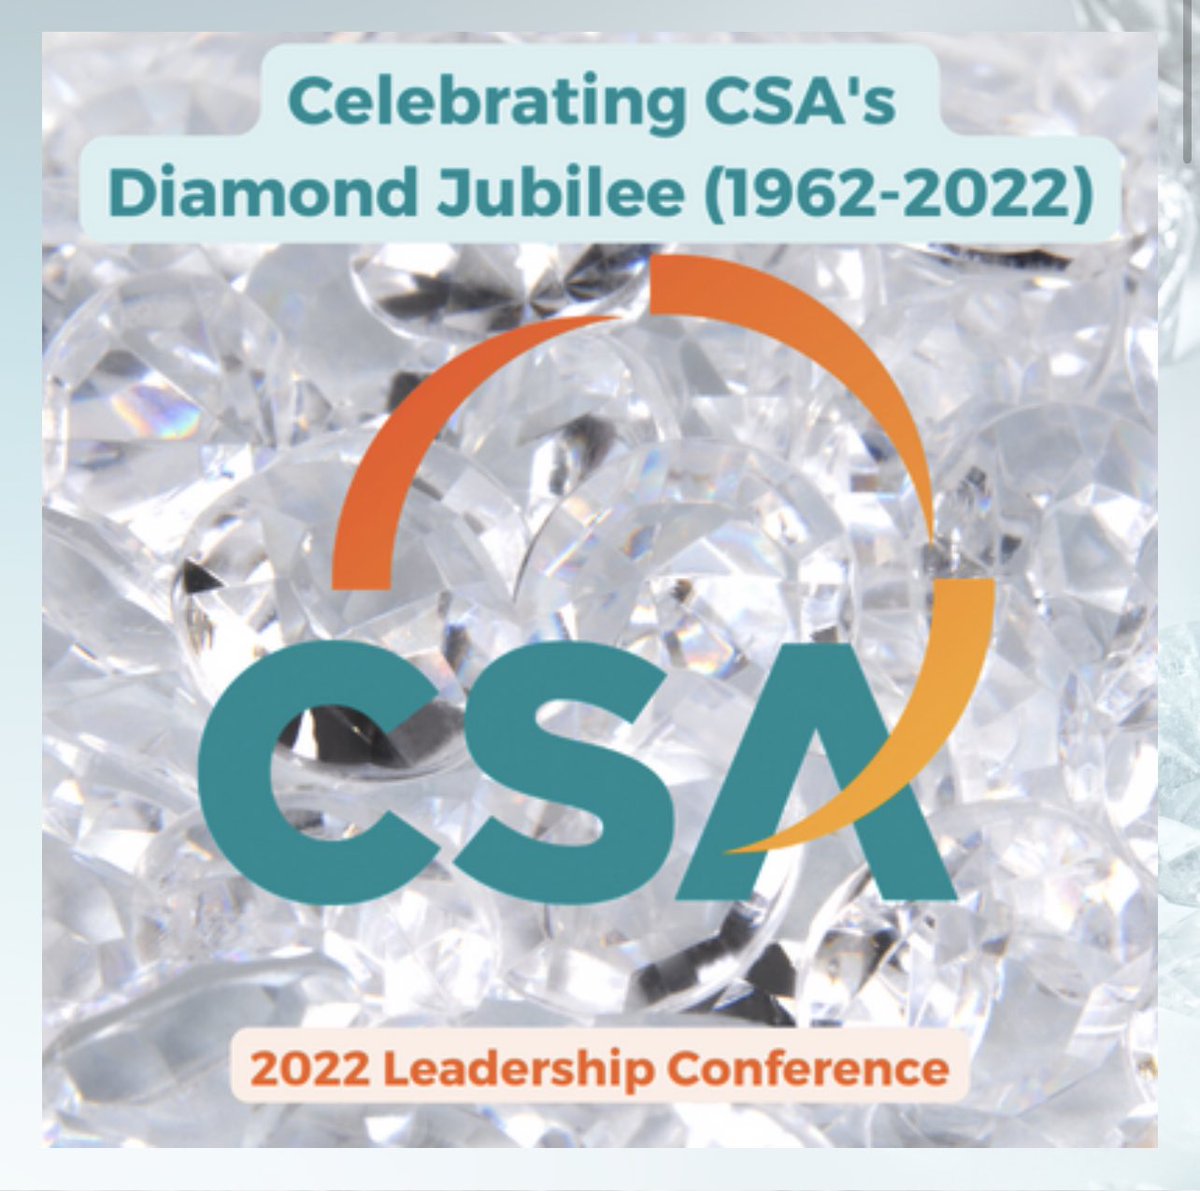 Our Diamond Jubilee #CSA Leadership Conference is on Saturday, Oct. 29, 2022. Visit csa-nyc.org to register asap! Hope to see you! - @FollowCSA @NYCSchools @DOEChancellor @NYCMayor #CouncilOfSupervisorsAndAdministrators #BlackCaucusCSA #CSABlackCaucus #BCCSA